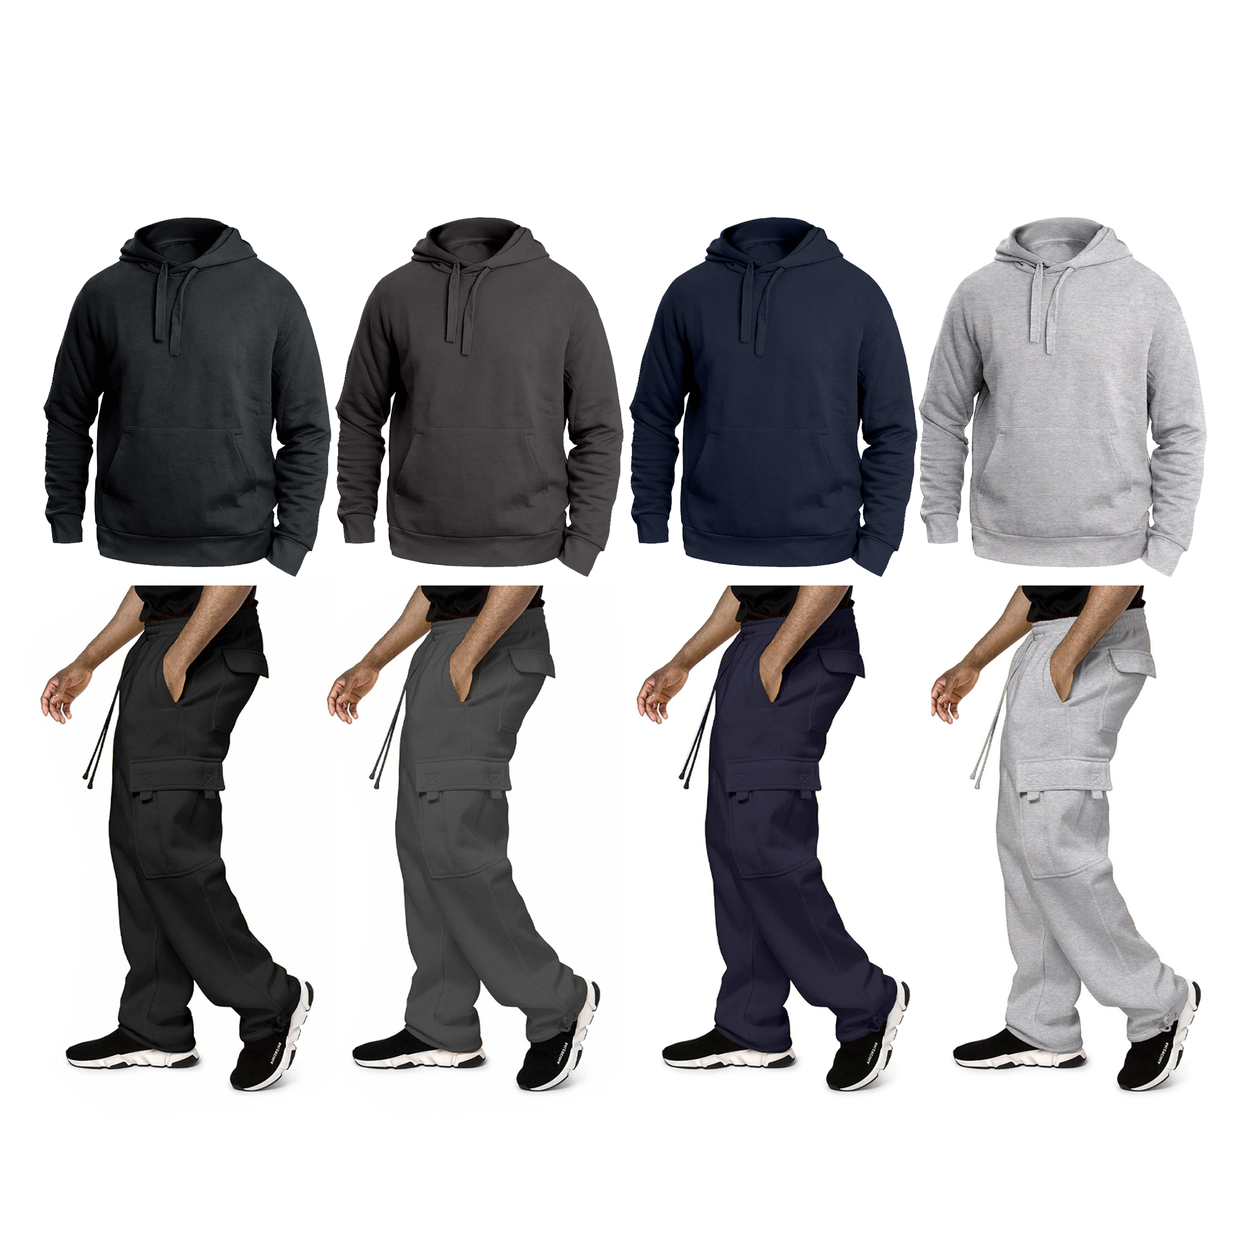 Men's Big & Tall Winter Warm Cozy Athletic Fleece Lined Multi-Pocket Cargo Sweatsuit - Grey, Large